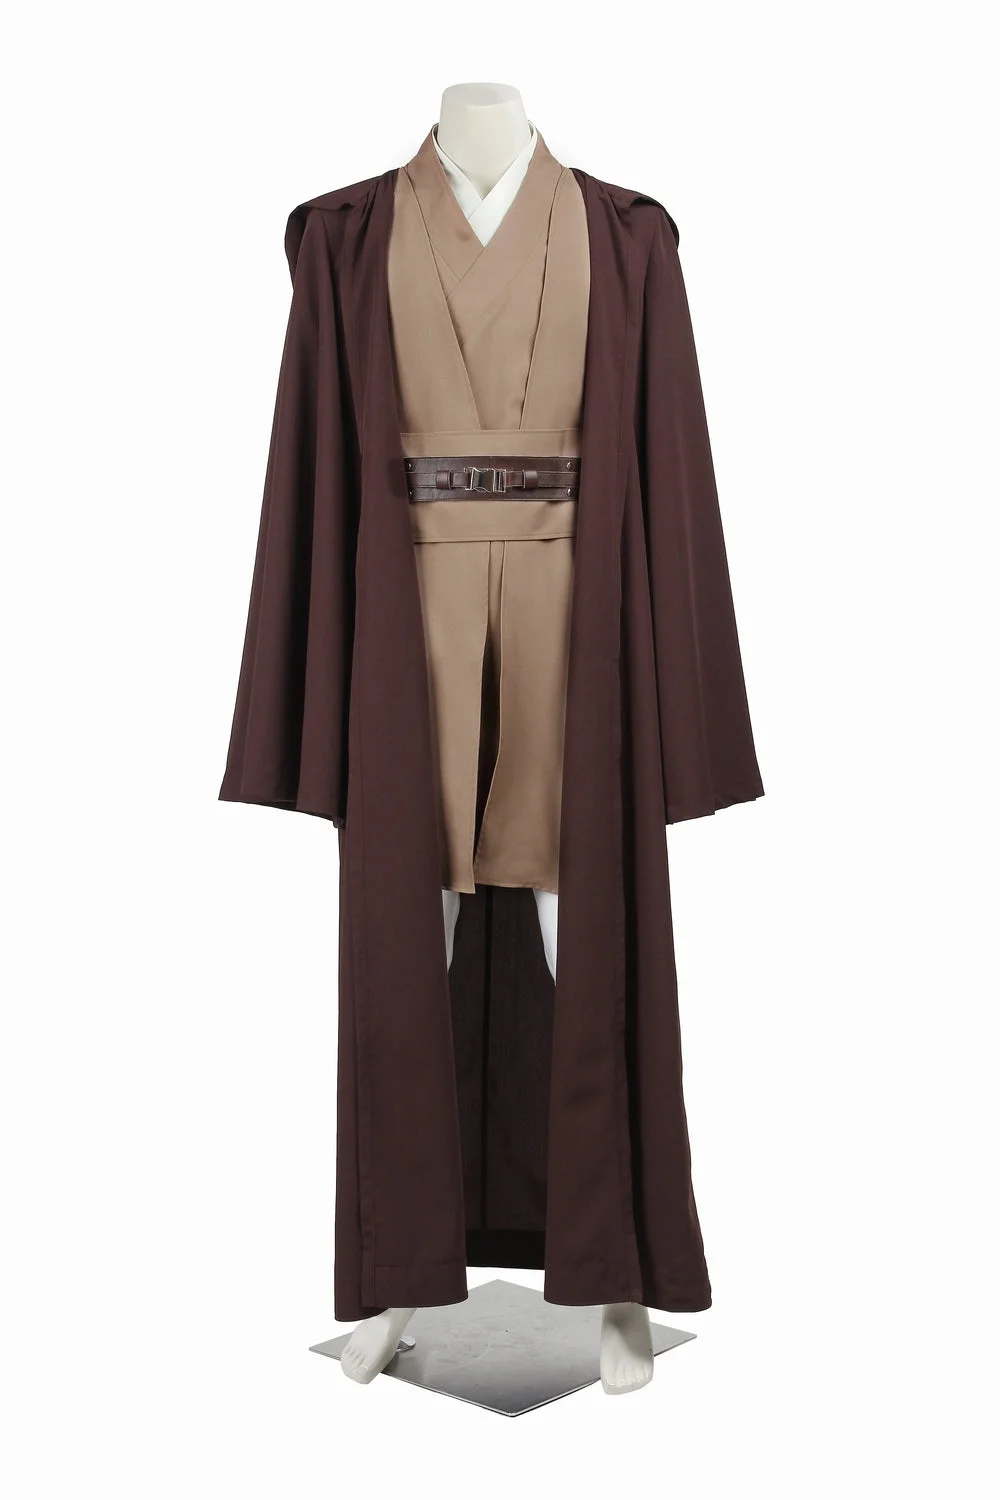 Star Wars Mace Windu Tunic Costume